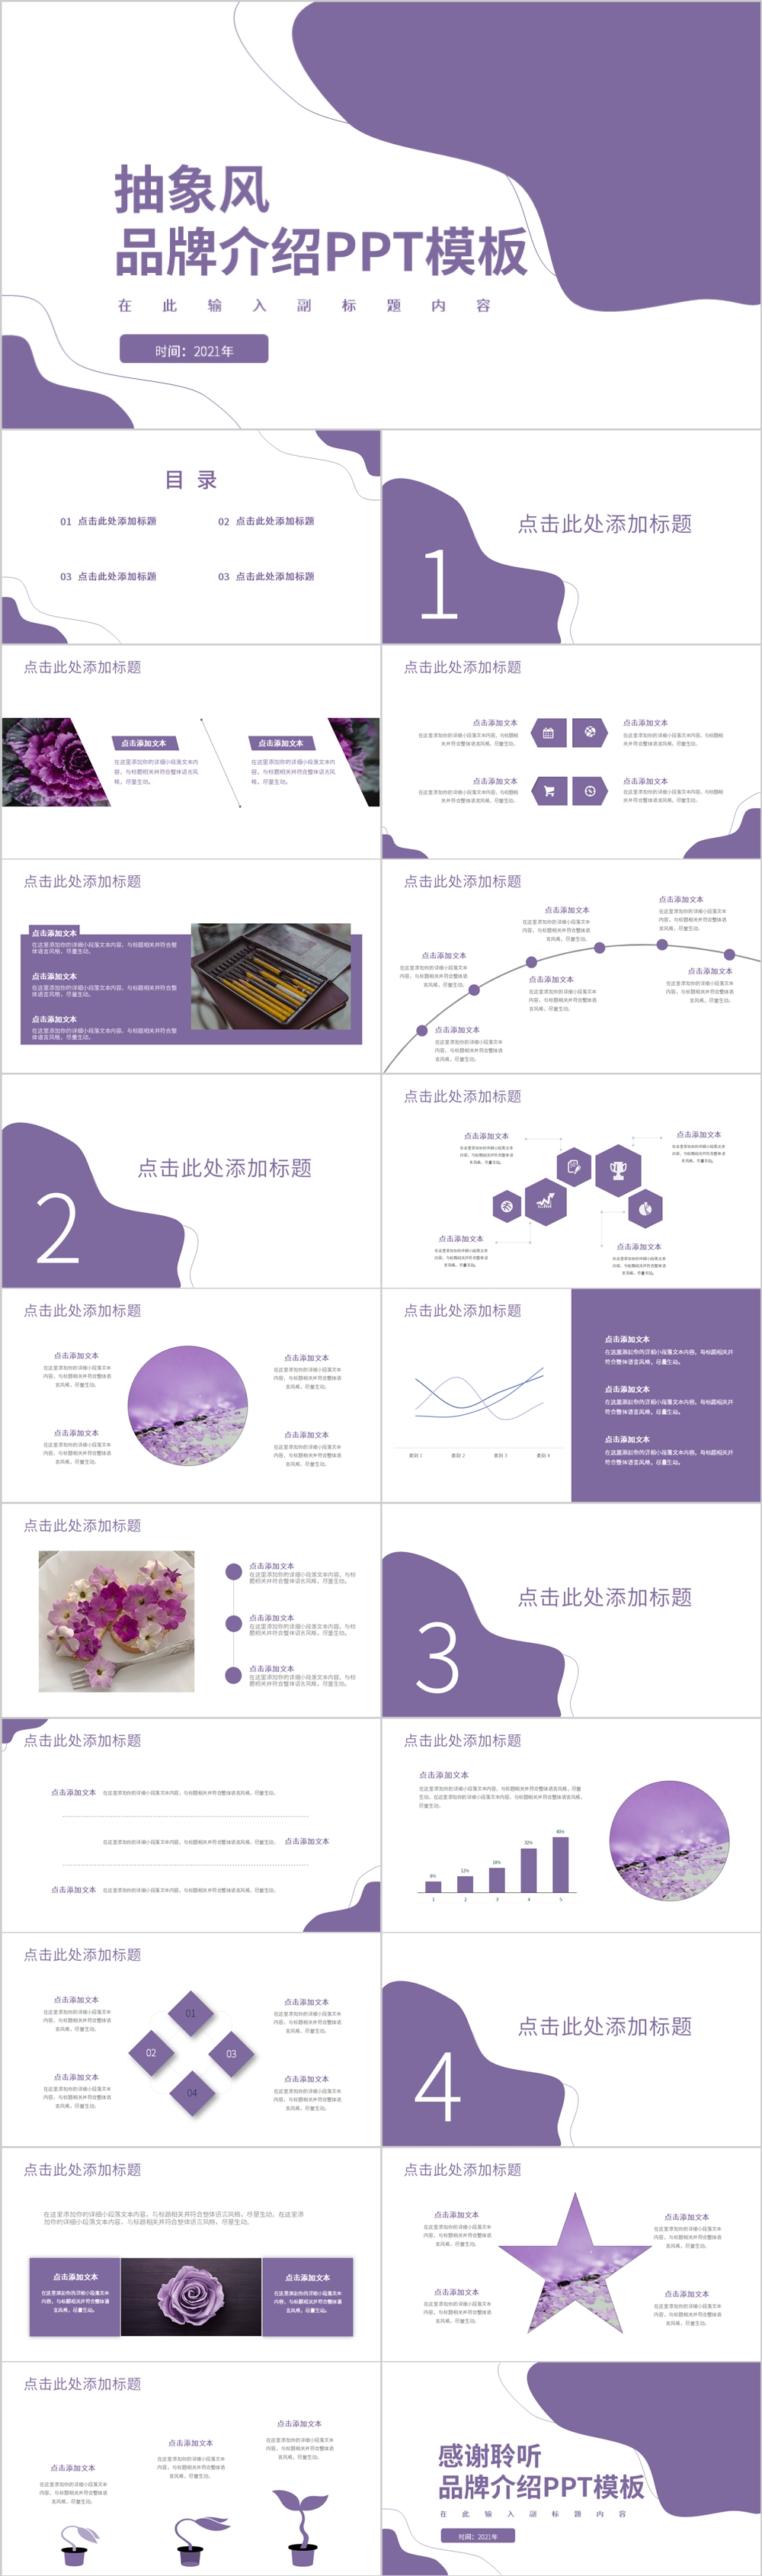 紫色系品牌介绍PPT模板